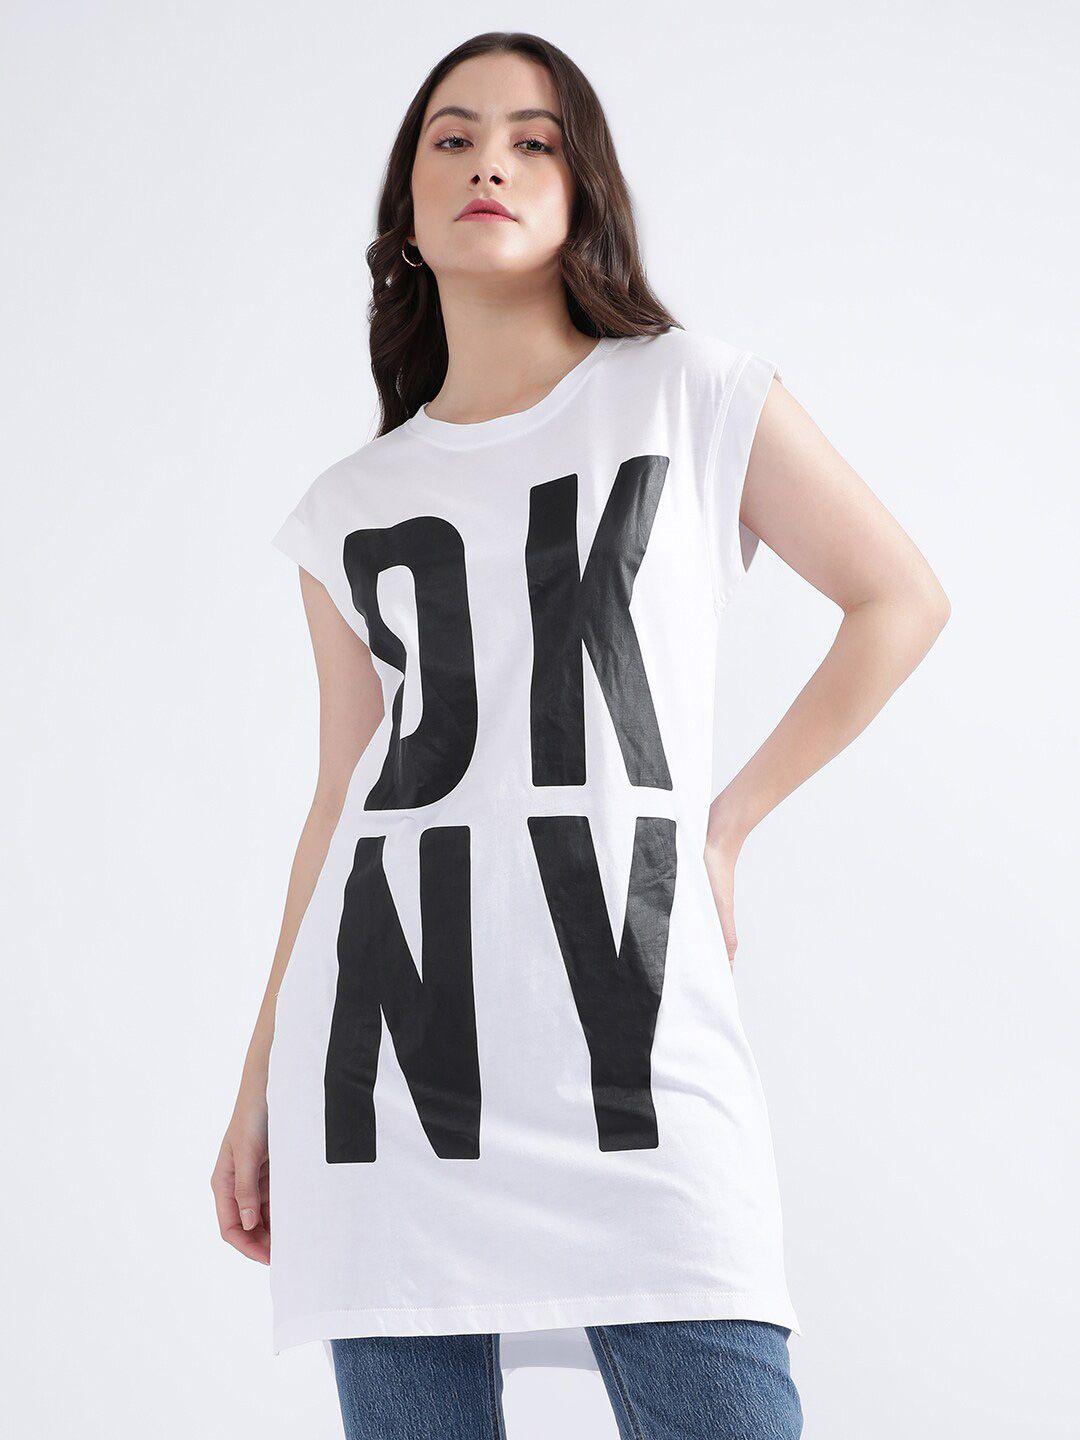 dkny typography printed cap sleeves monochrome longline top